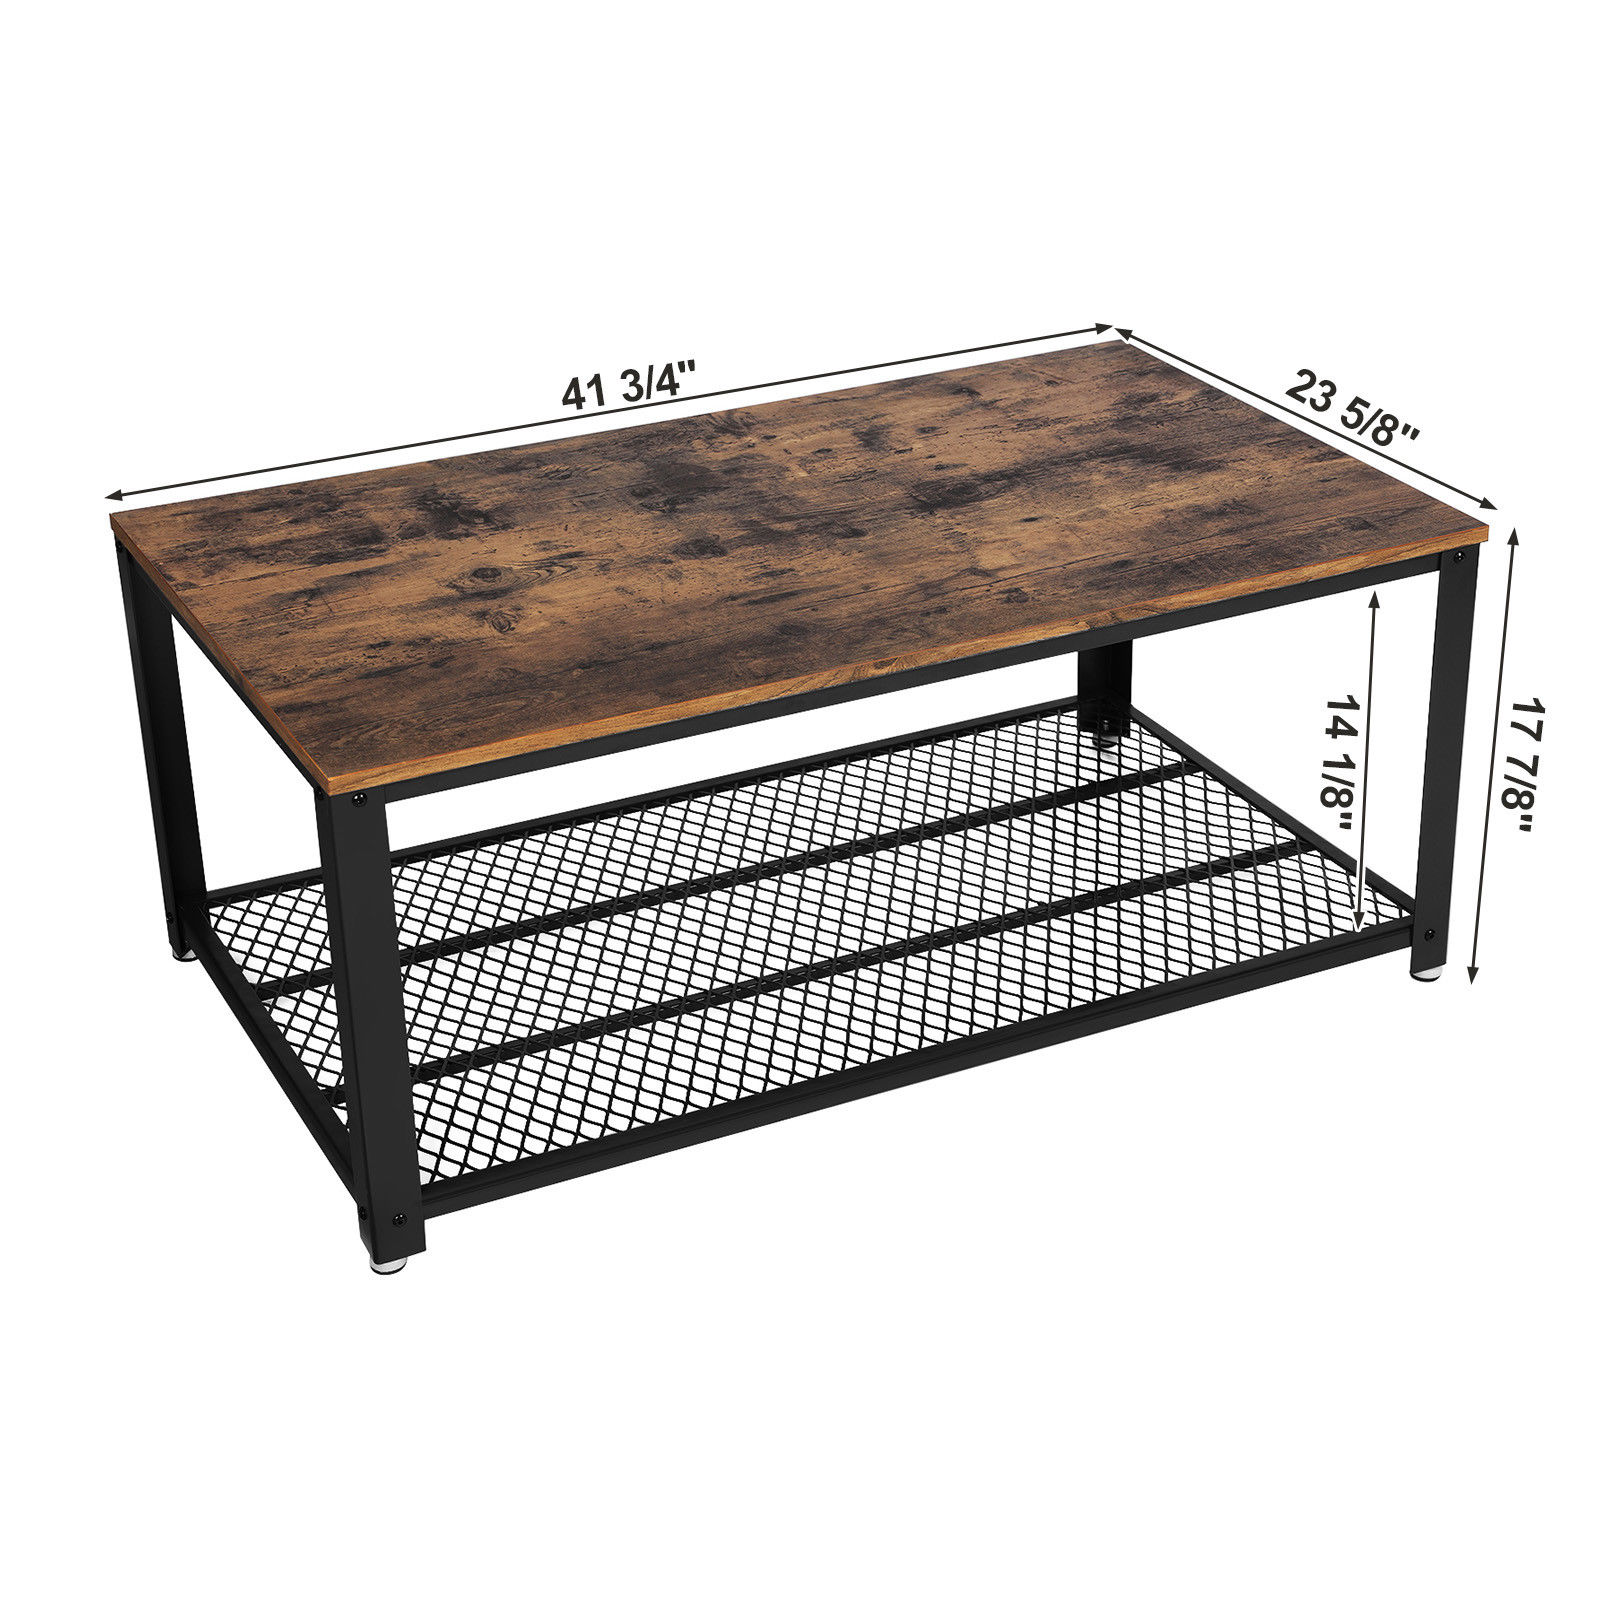 Coffee table coffee table with metal legs waterproof table top